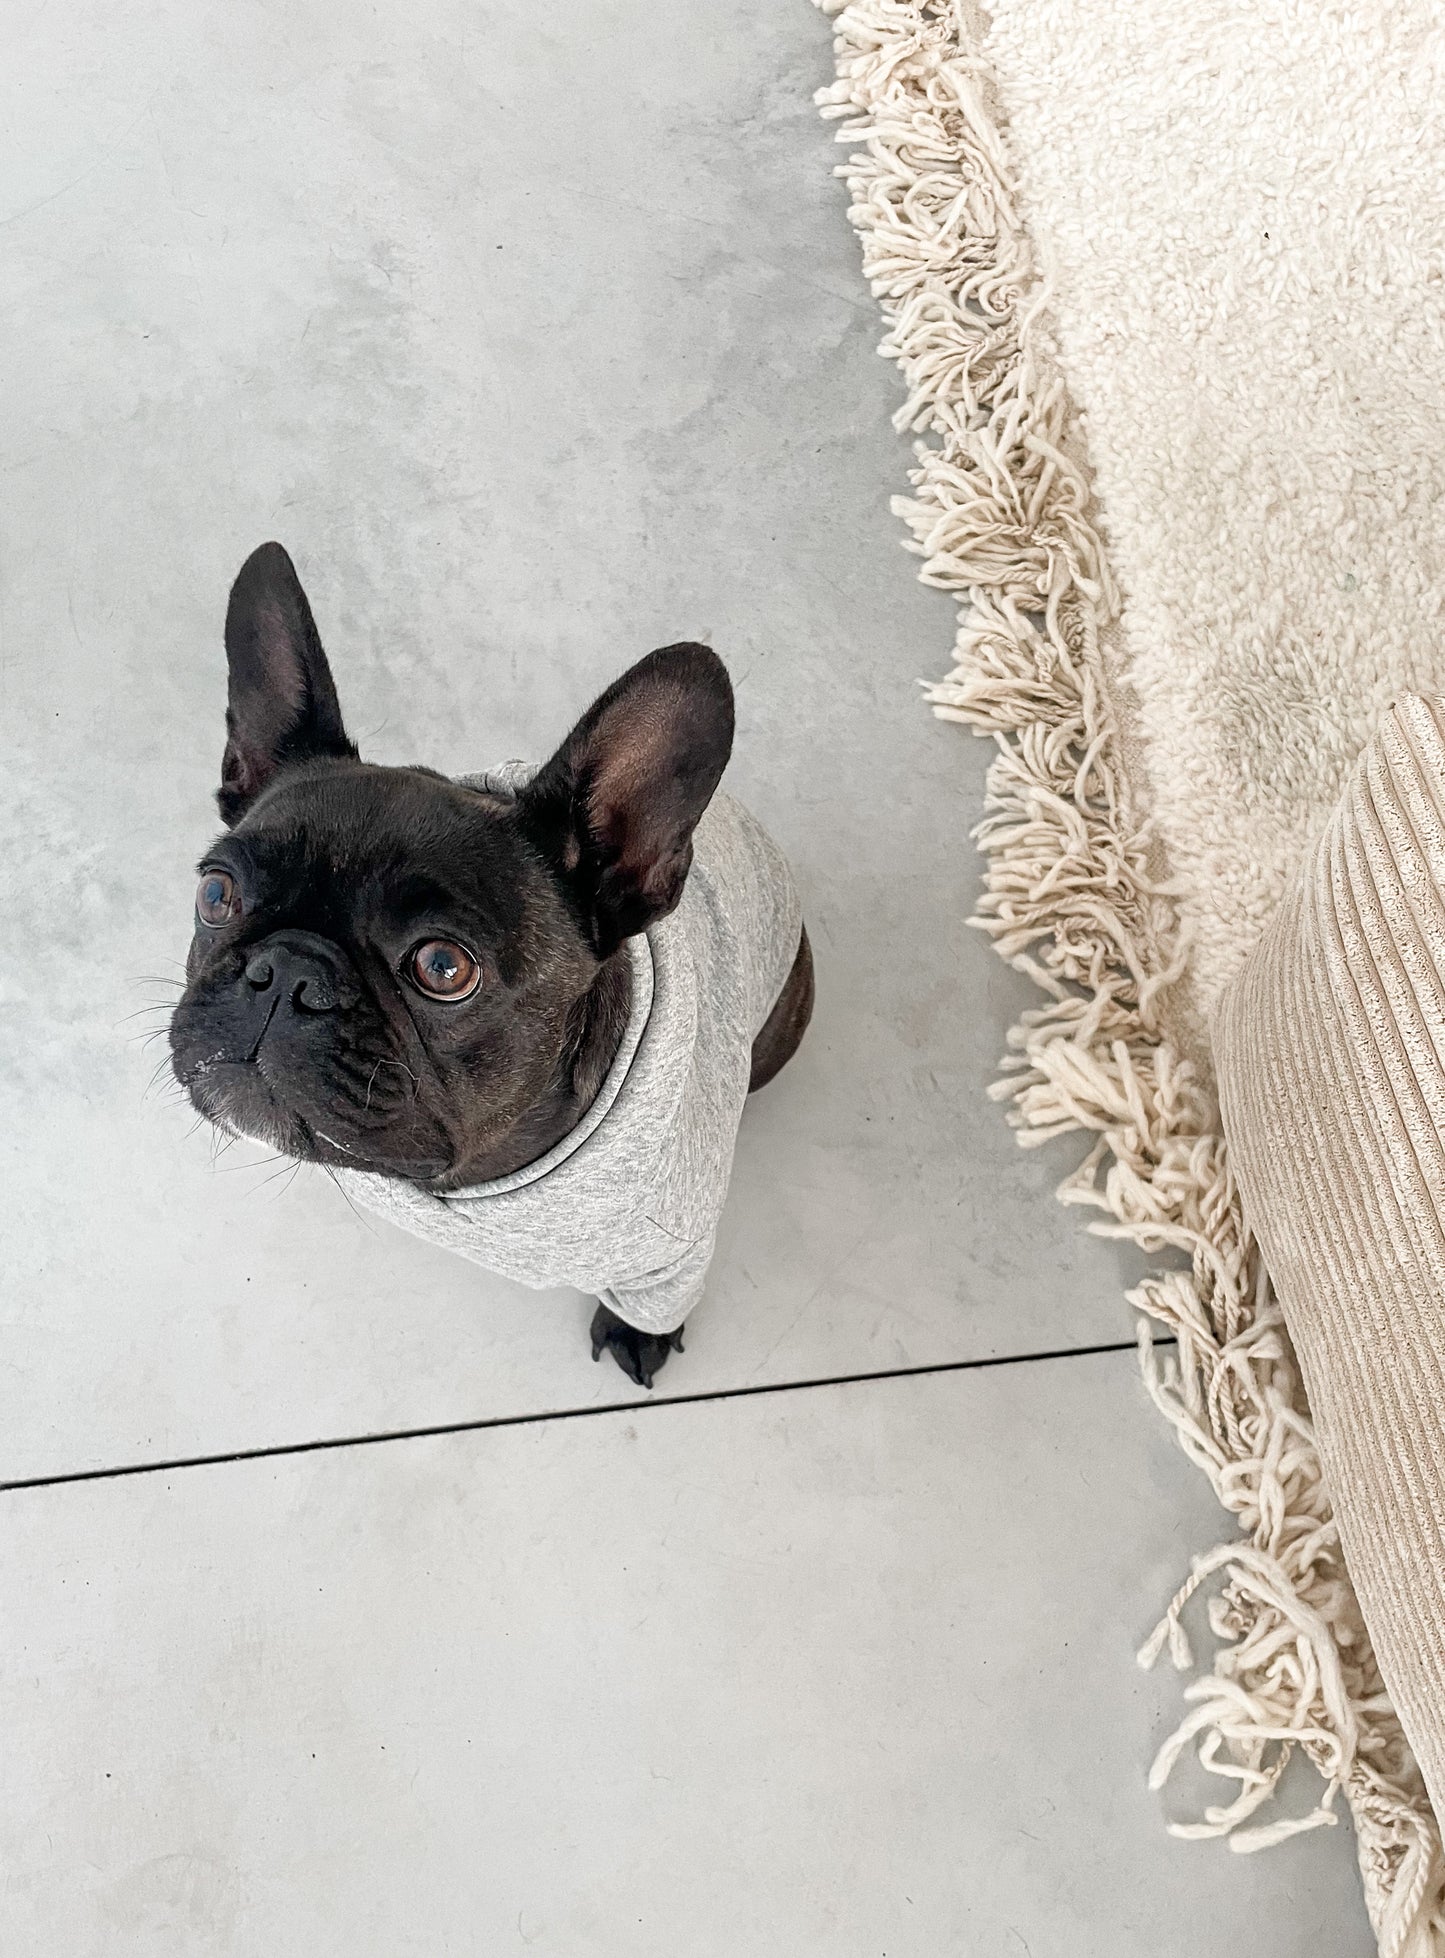 Dog sweater - grey